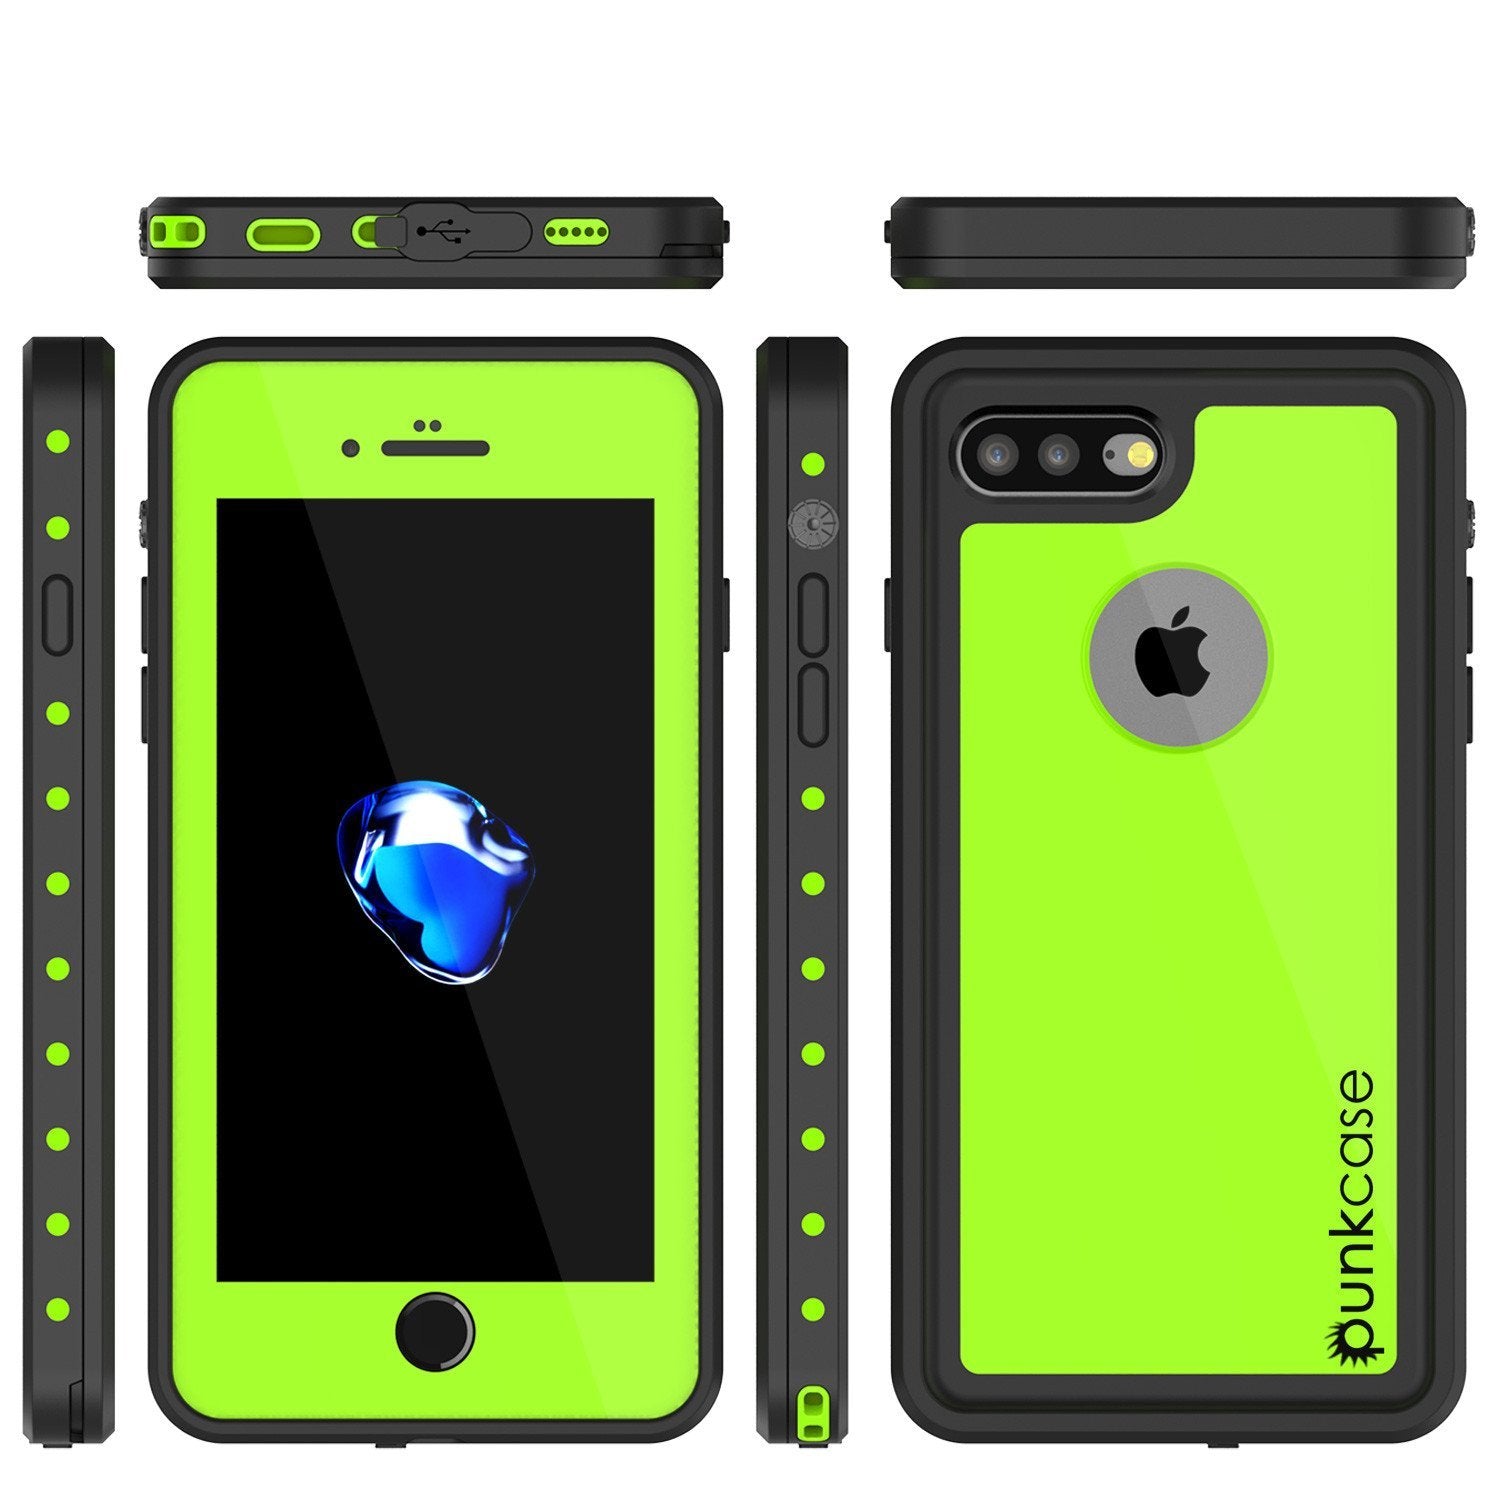 iPhone 8+ Plus Waterproof IP68 Case, Punkcase [Light Green] [StudStar Series] [Slim Fit] [Dirtproof] - PunkCase NZ